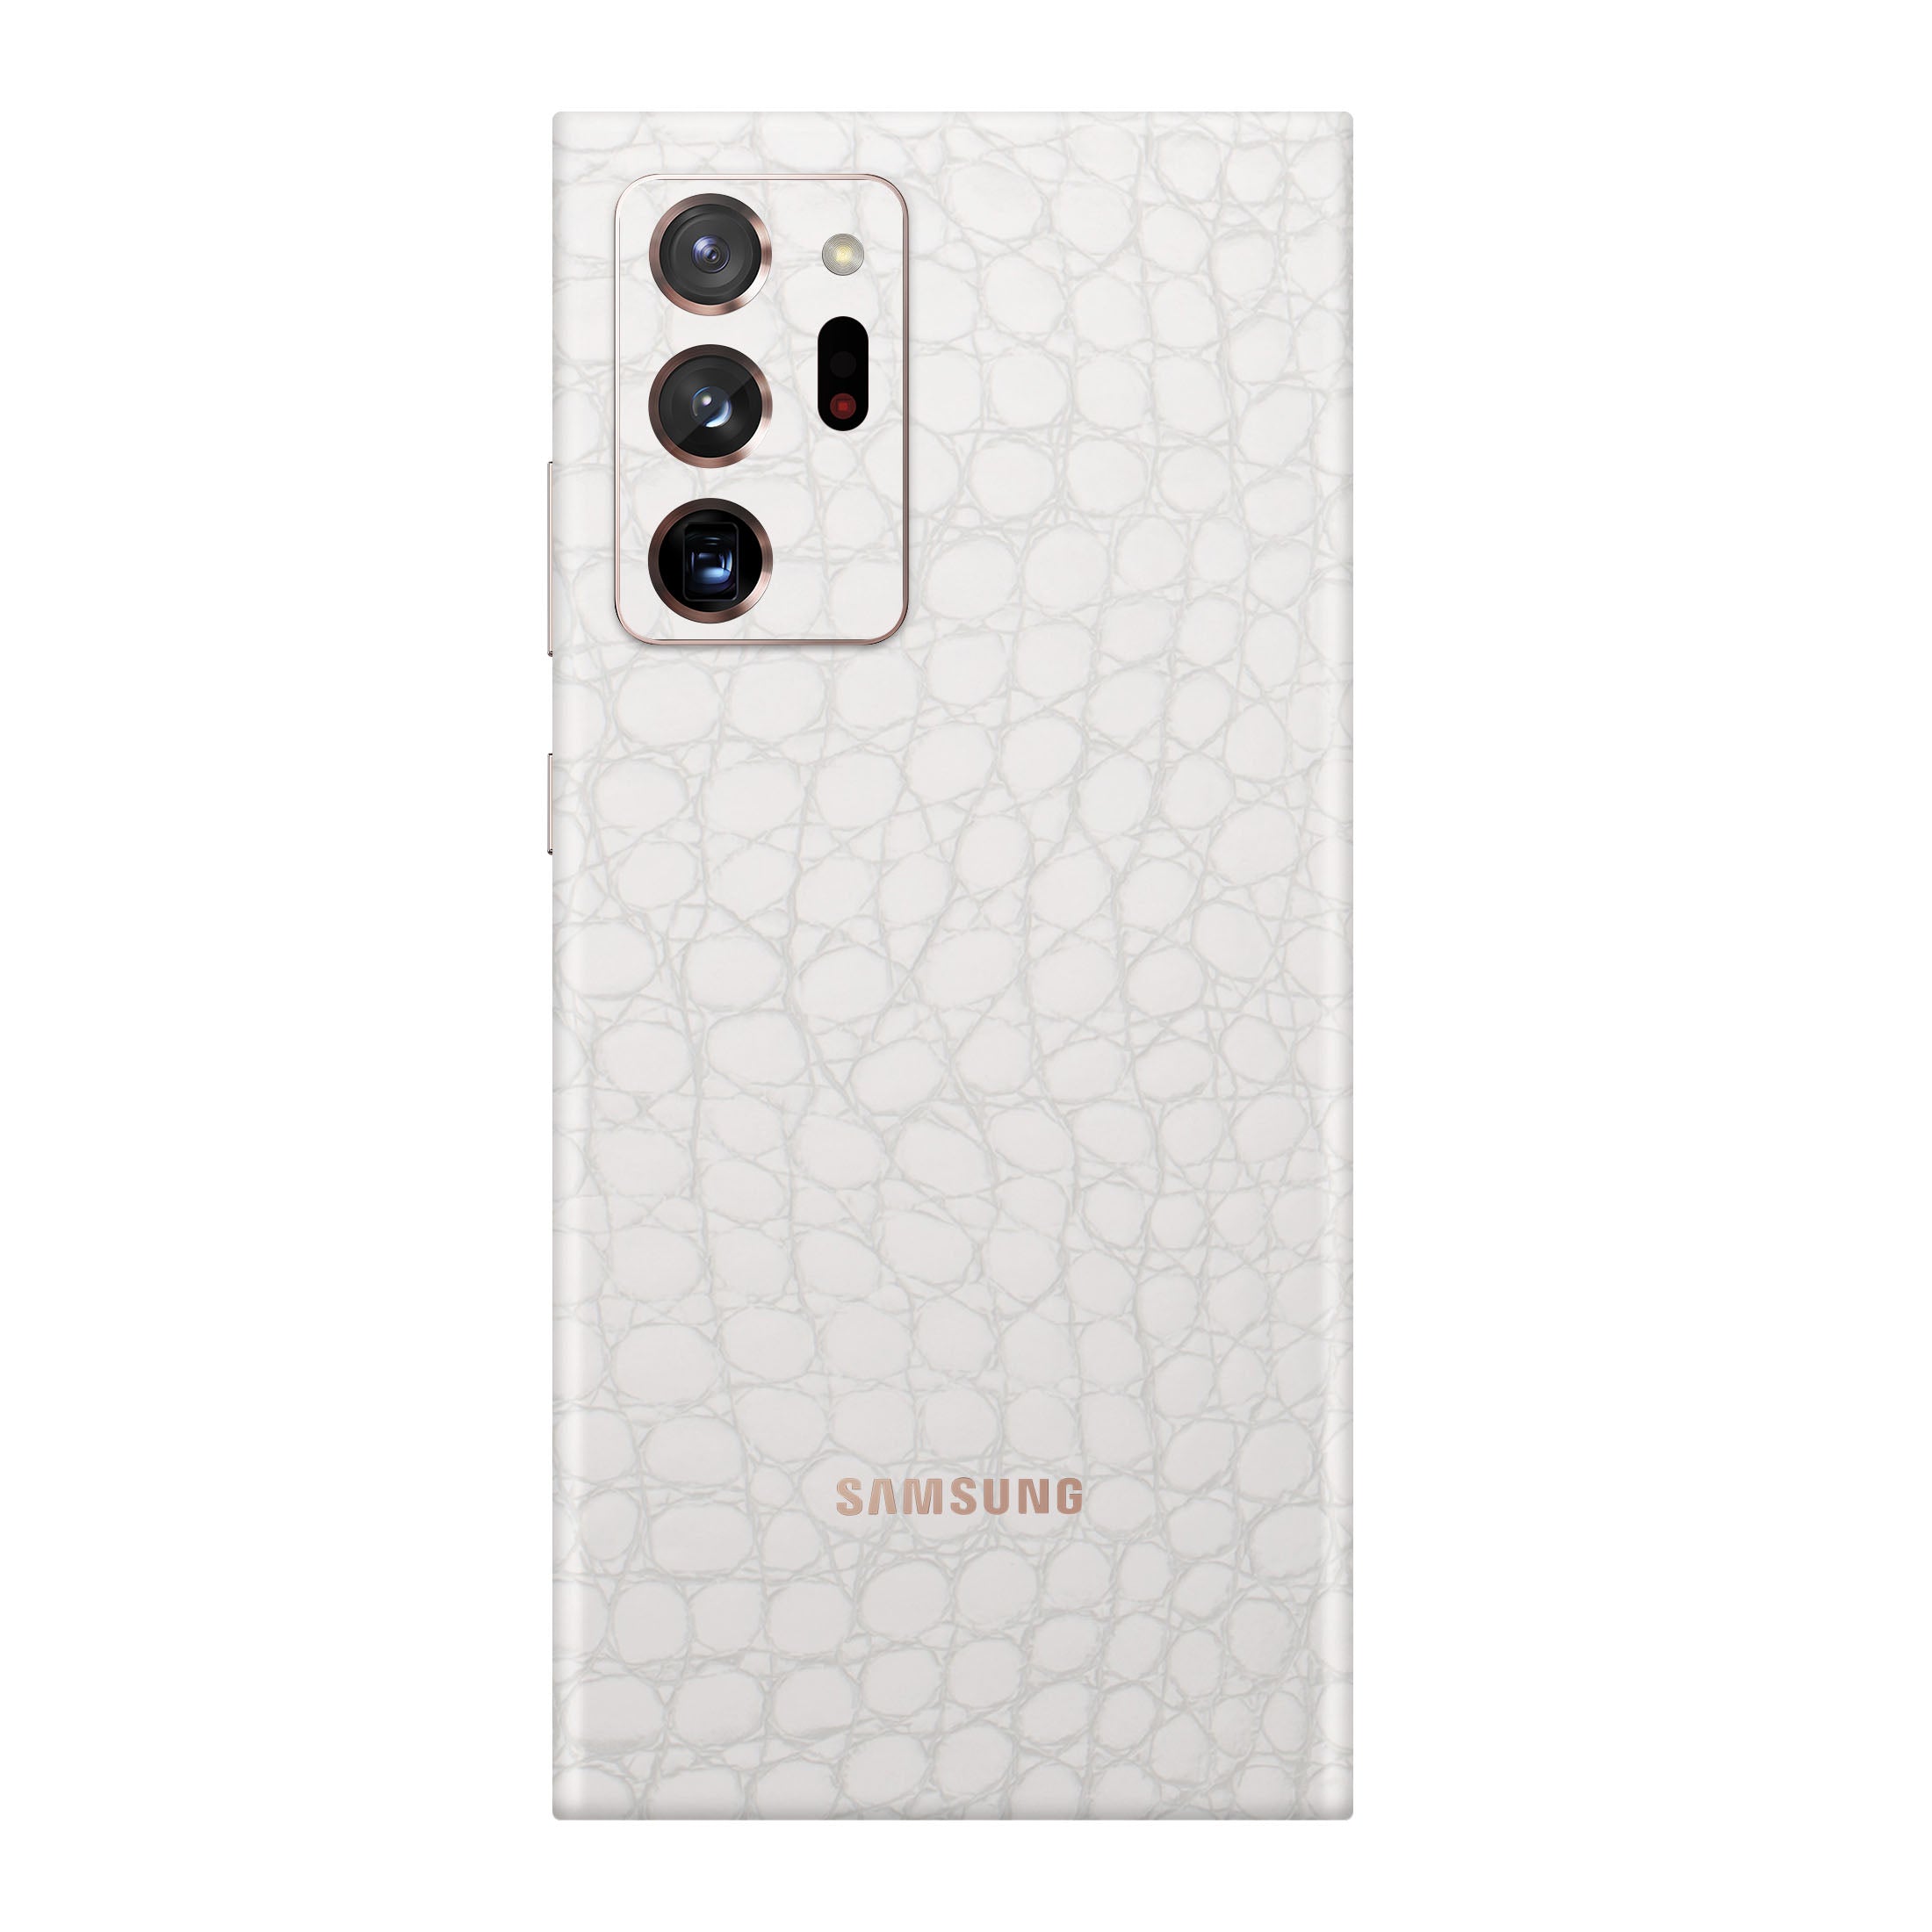 Crocodile White Skin for Samsung Note 20 Ultra